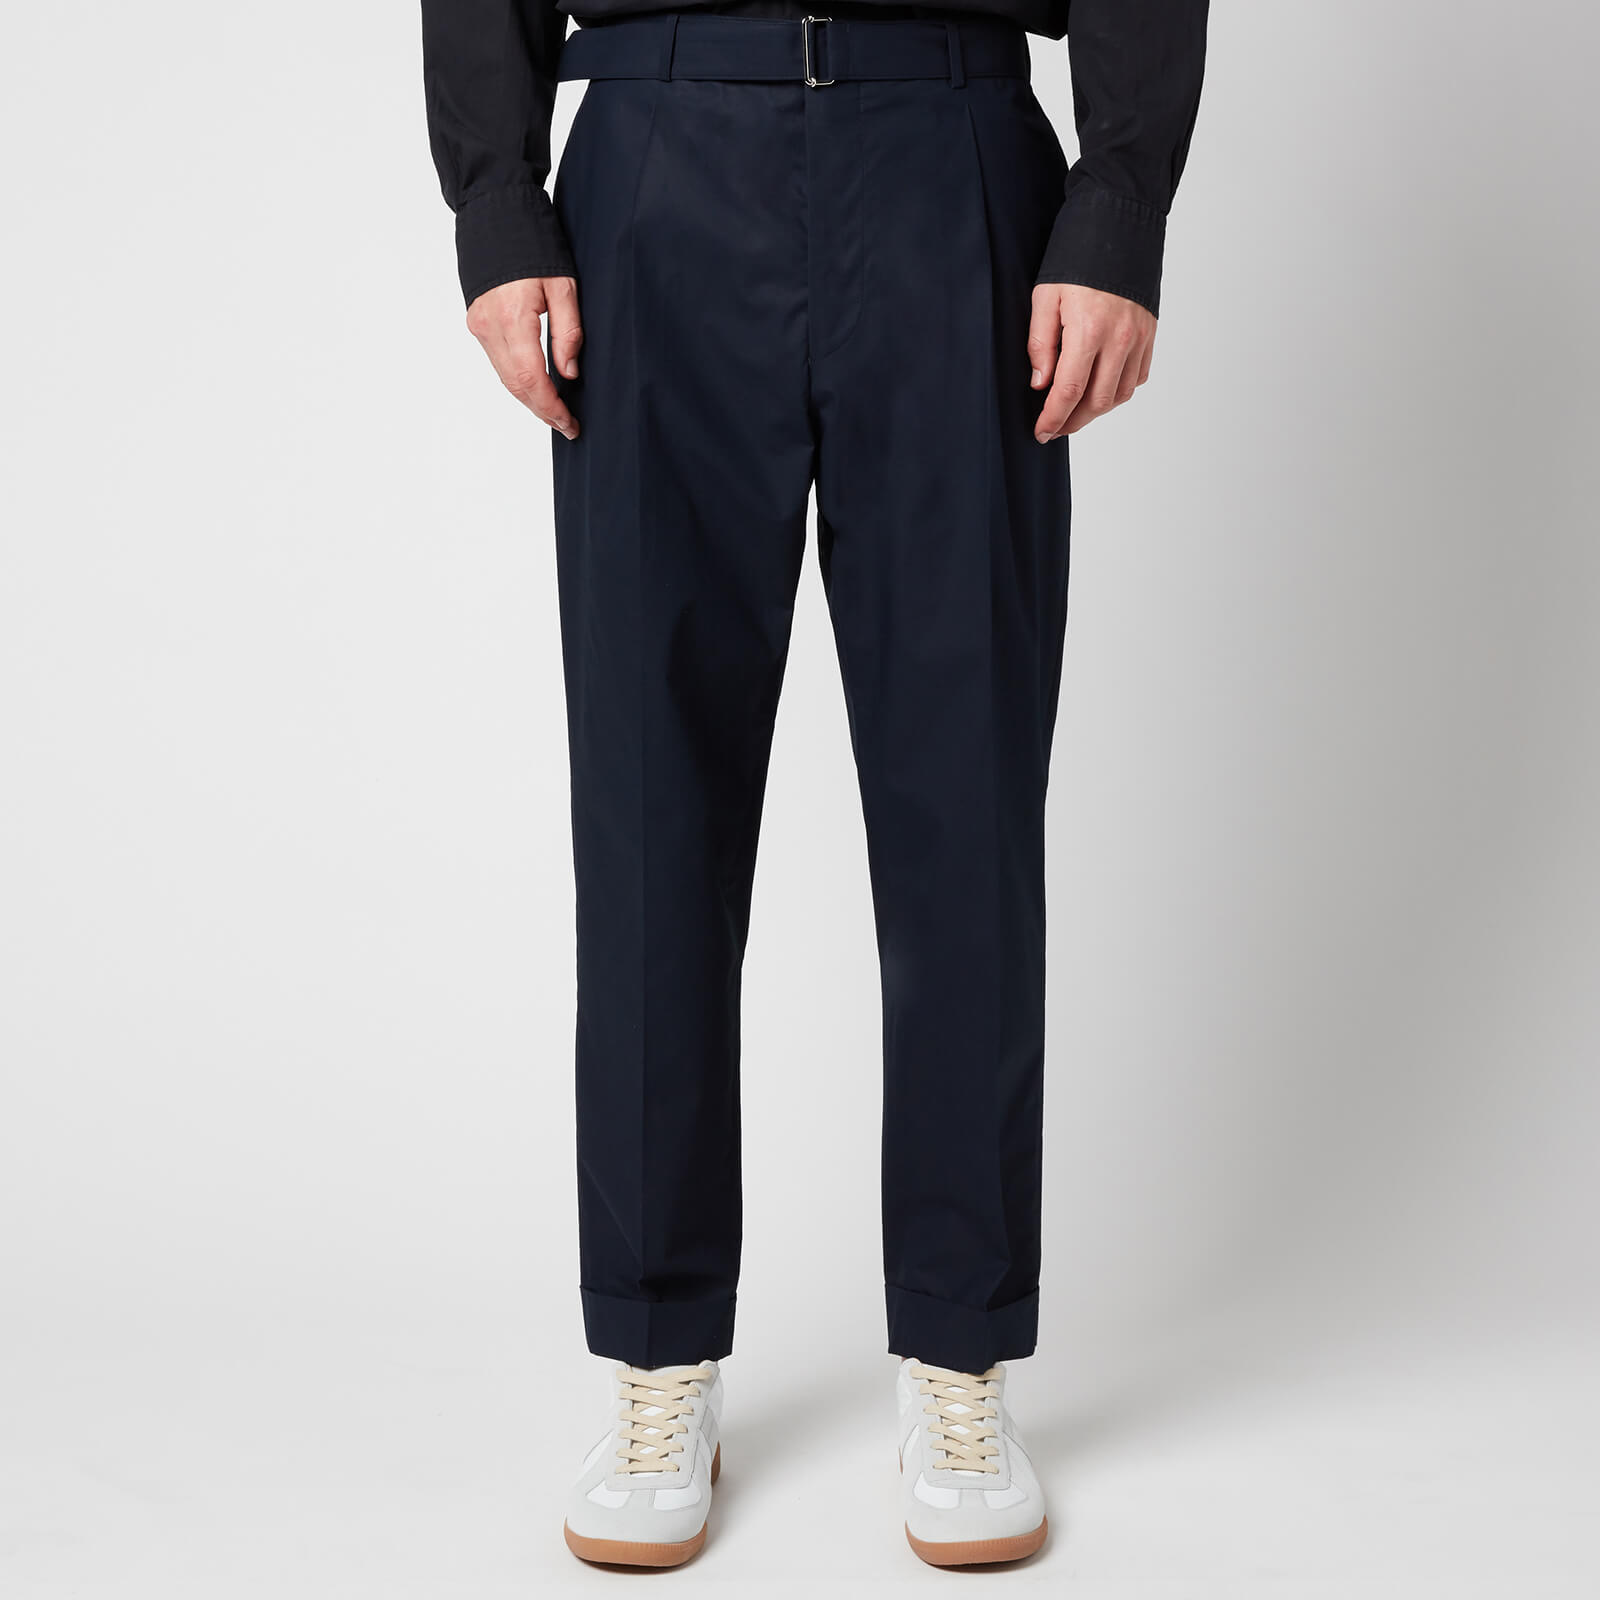 Officine Generale Men's Hugo Straight Fit Trousers - Dark Navy - EU 46/S